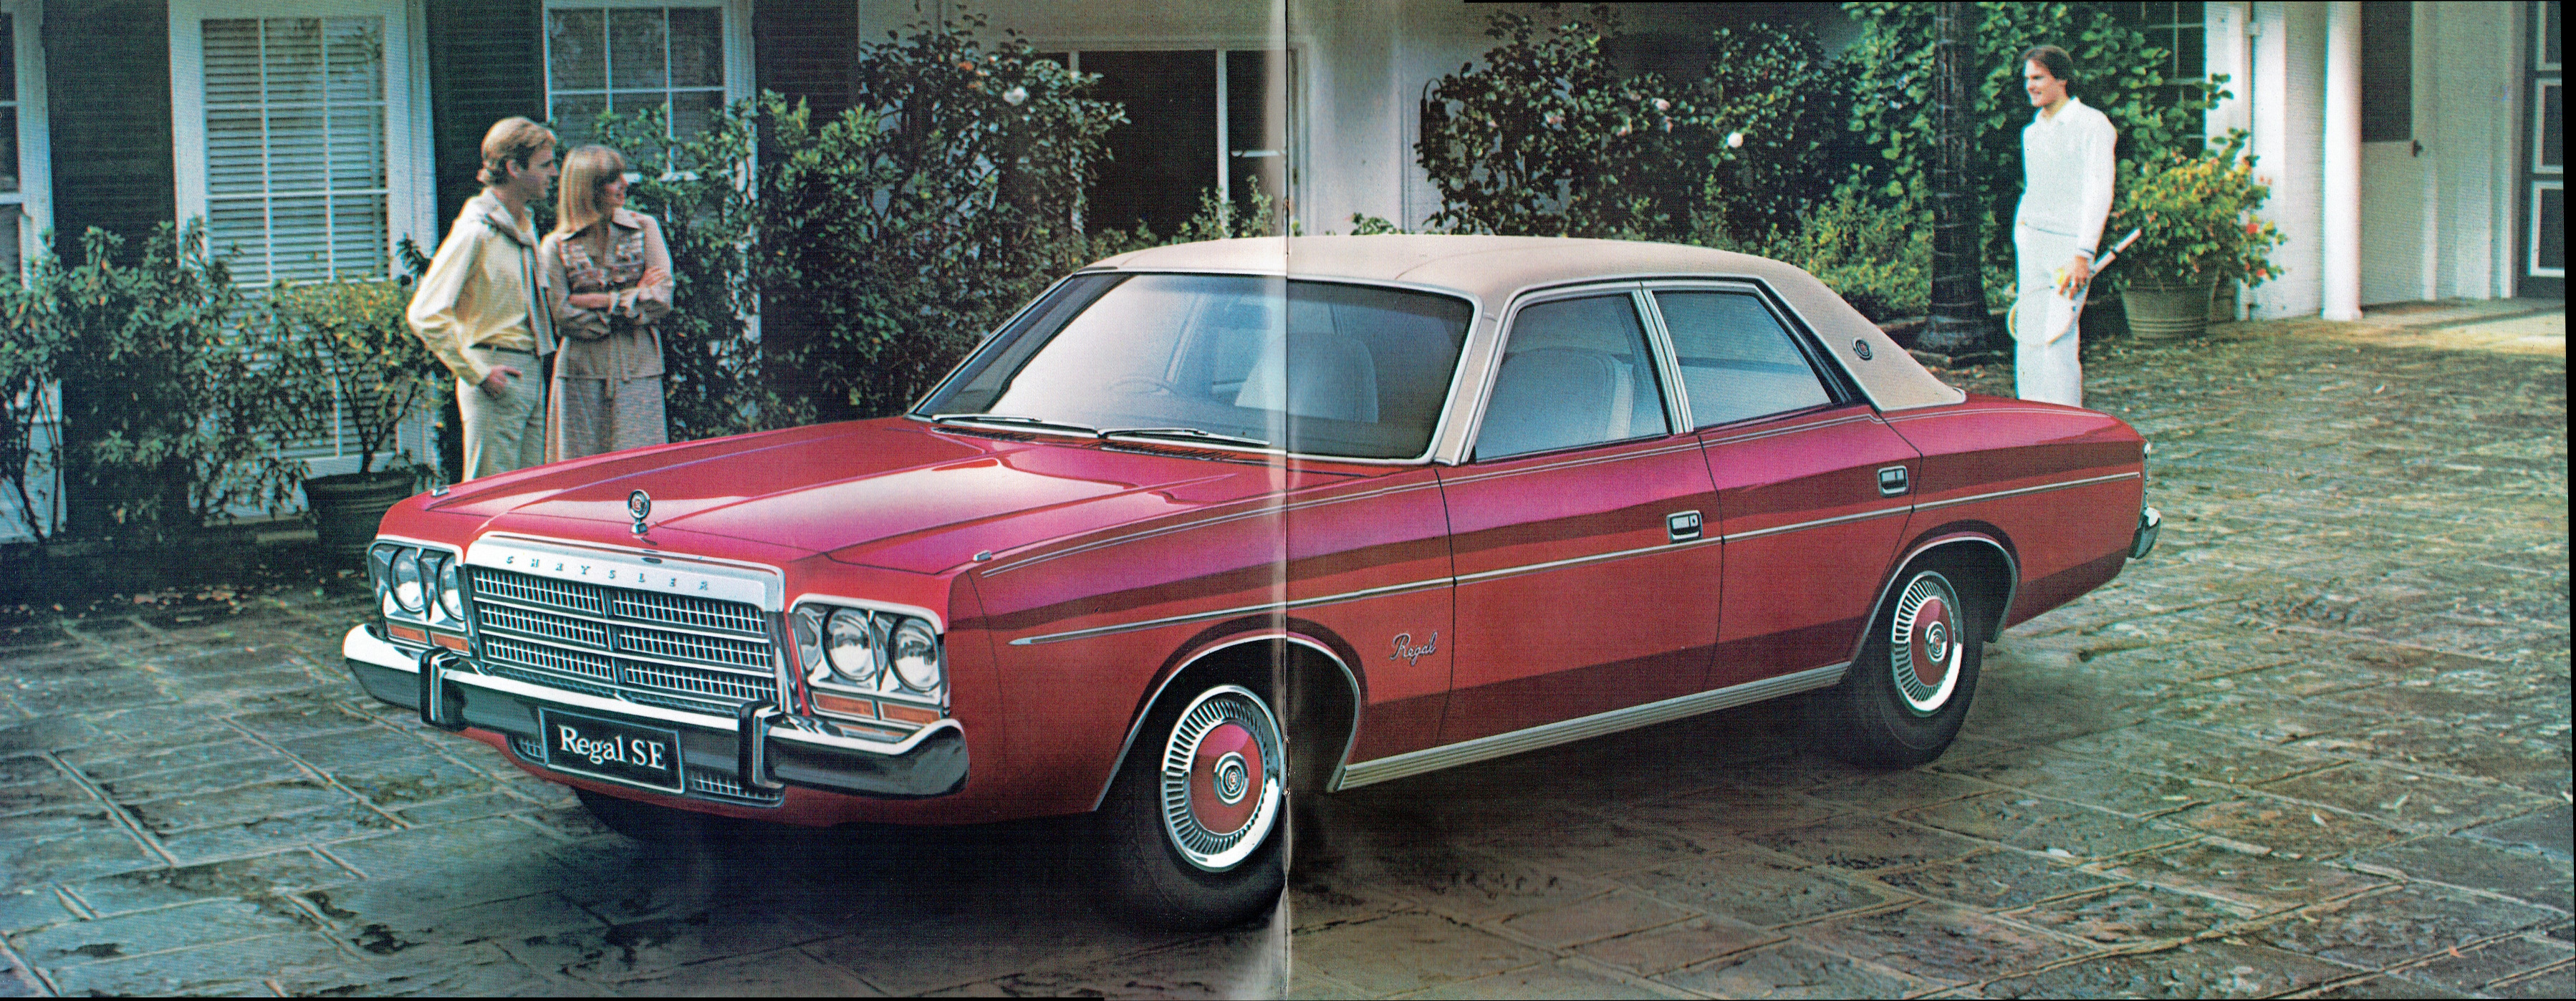 1976_Chrysler_CL_Regal_SE-06-07